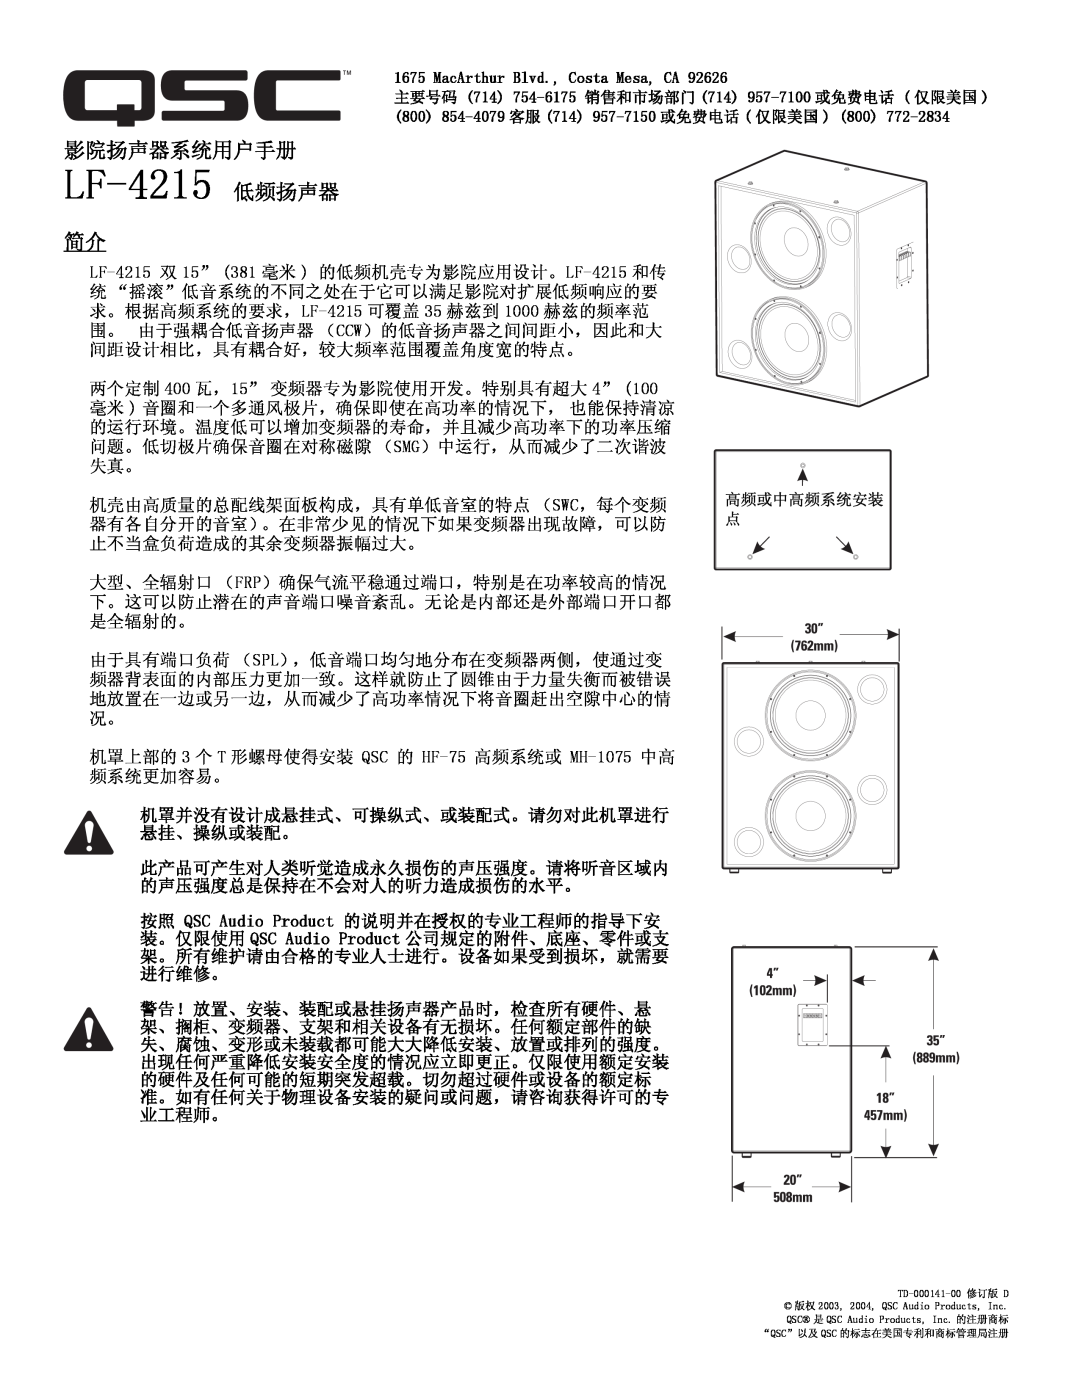 Polaroid user manual 影院扬声器系统用户手册, LF-4215 低频扬声器 